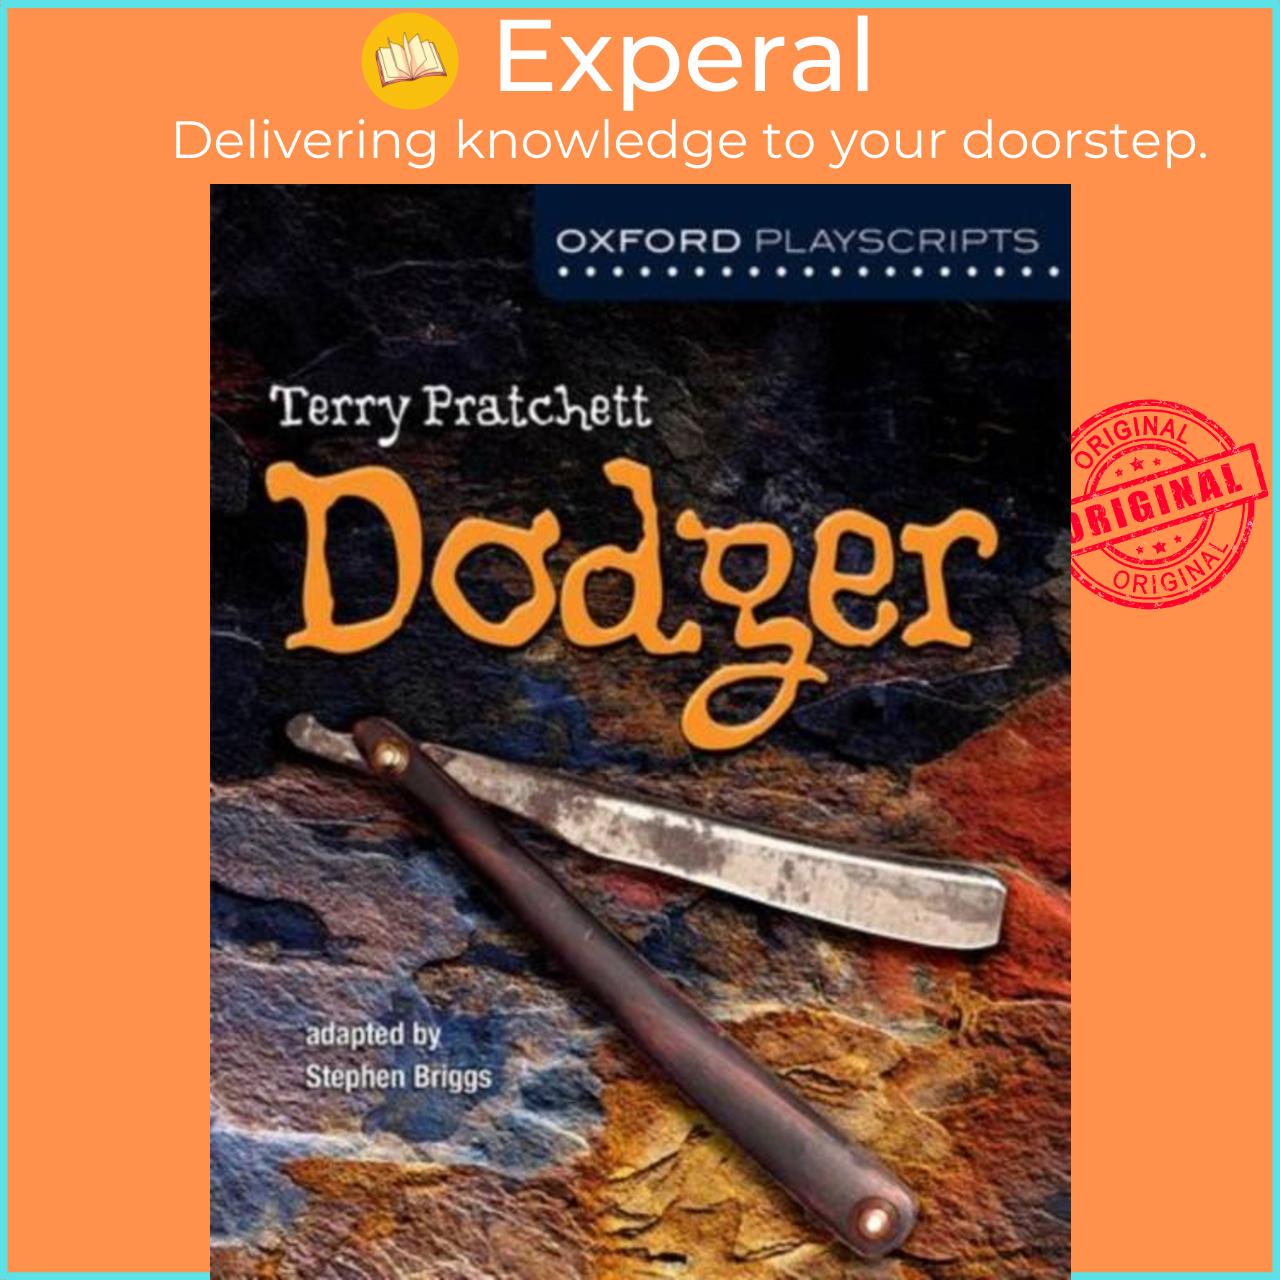 Sách - Oxford Playscripts: Dodger by Terry Pratchett (UK edition, paperback)